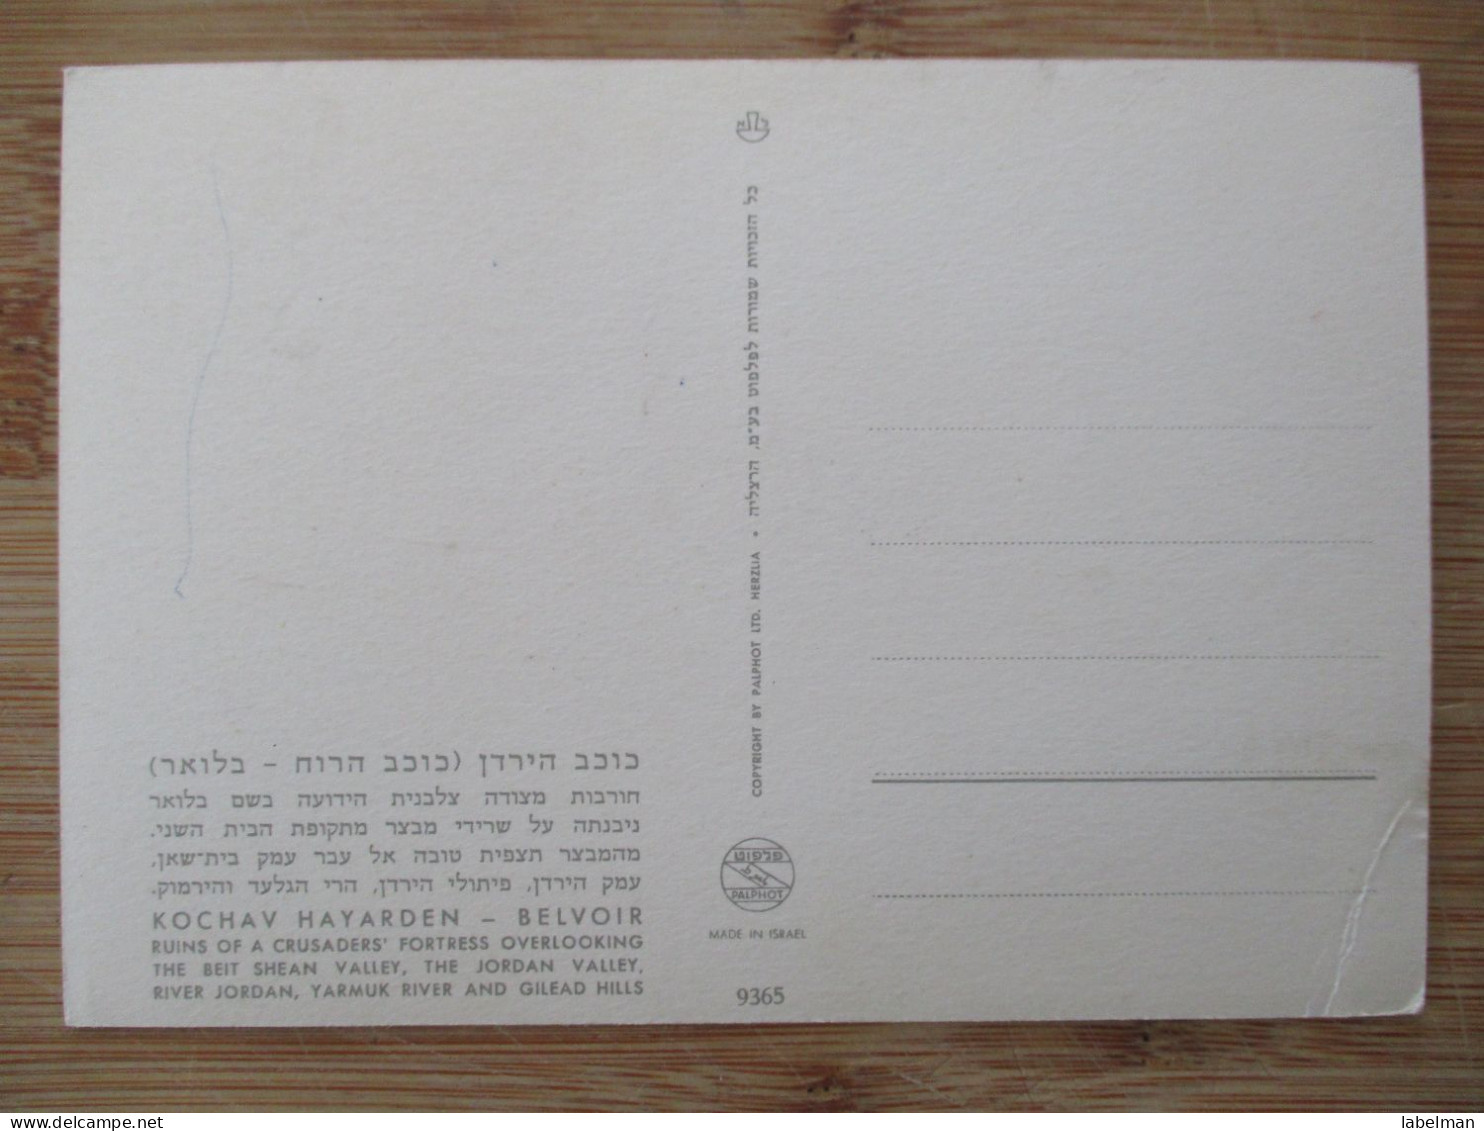 ISRAEL JORDAN VALLEY BELVOIR FORTRESS KOCHAV HAYARDEN CARTE POSTALE POSTCARD ANSICHTSKARTE CARD CARTOLINA POSTKARTE - Israel